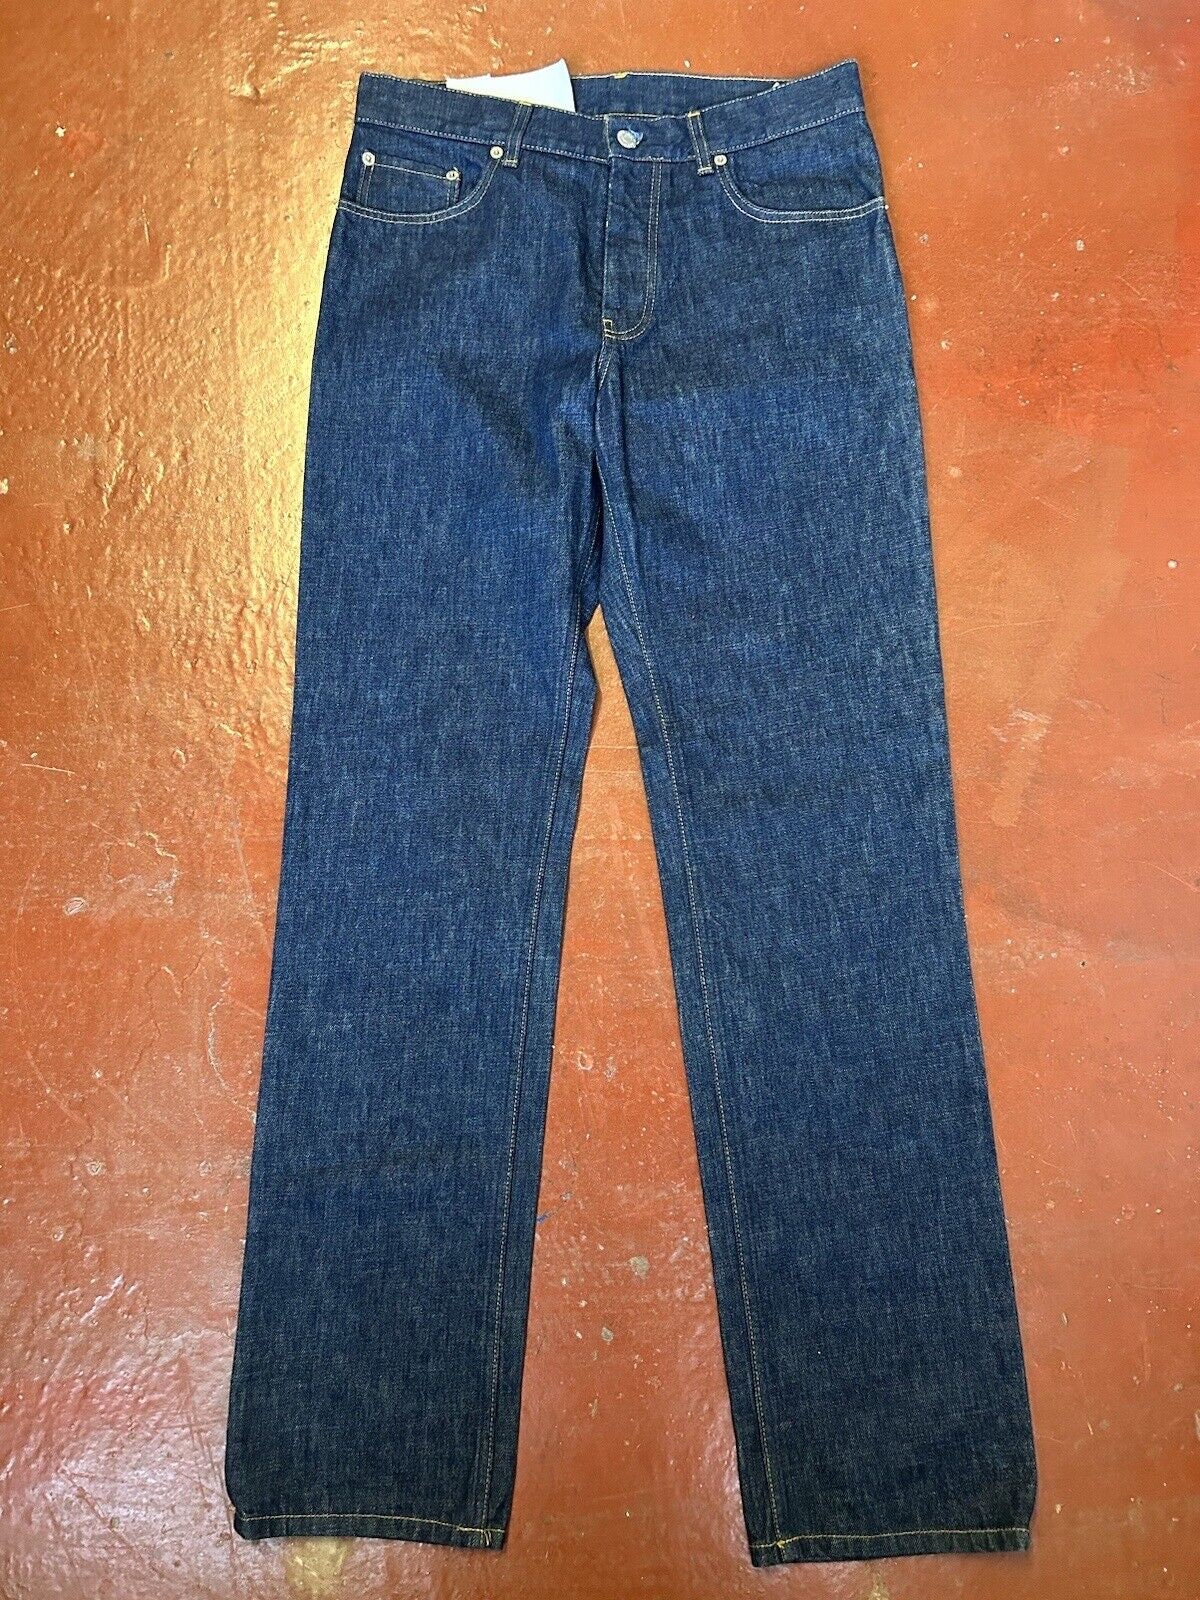 Helmut Lang Vintage Dark Denim Jeans Unworn Made in Italy 5 Pocket